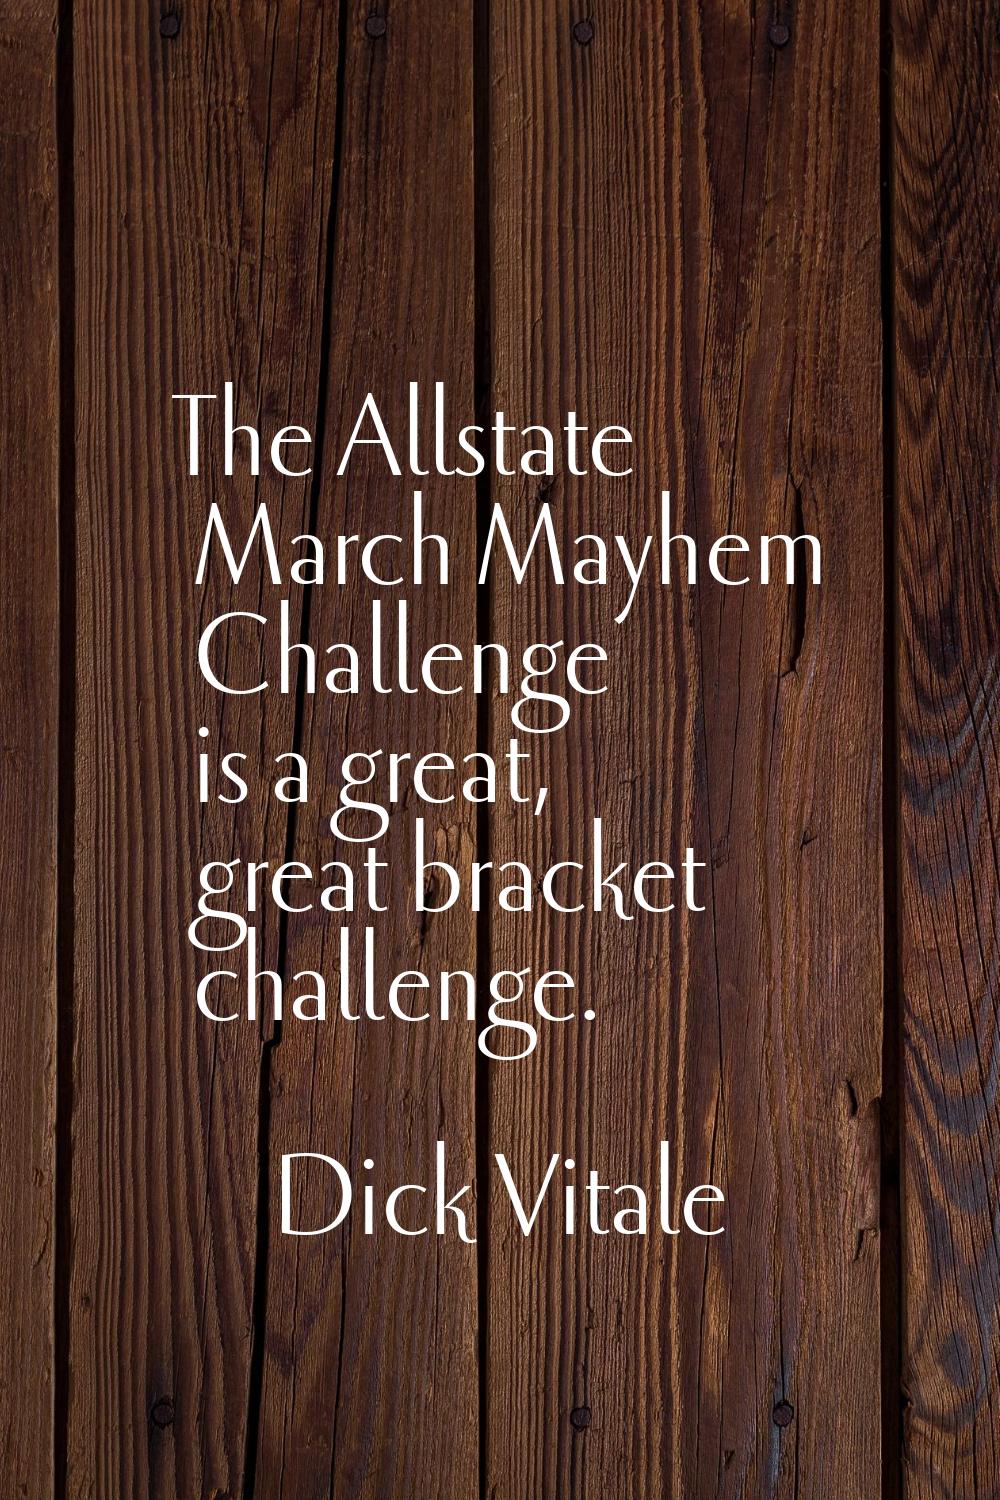 The Allstate March Mayhem Challenge is a great, great bracket challenge.